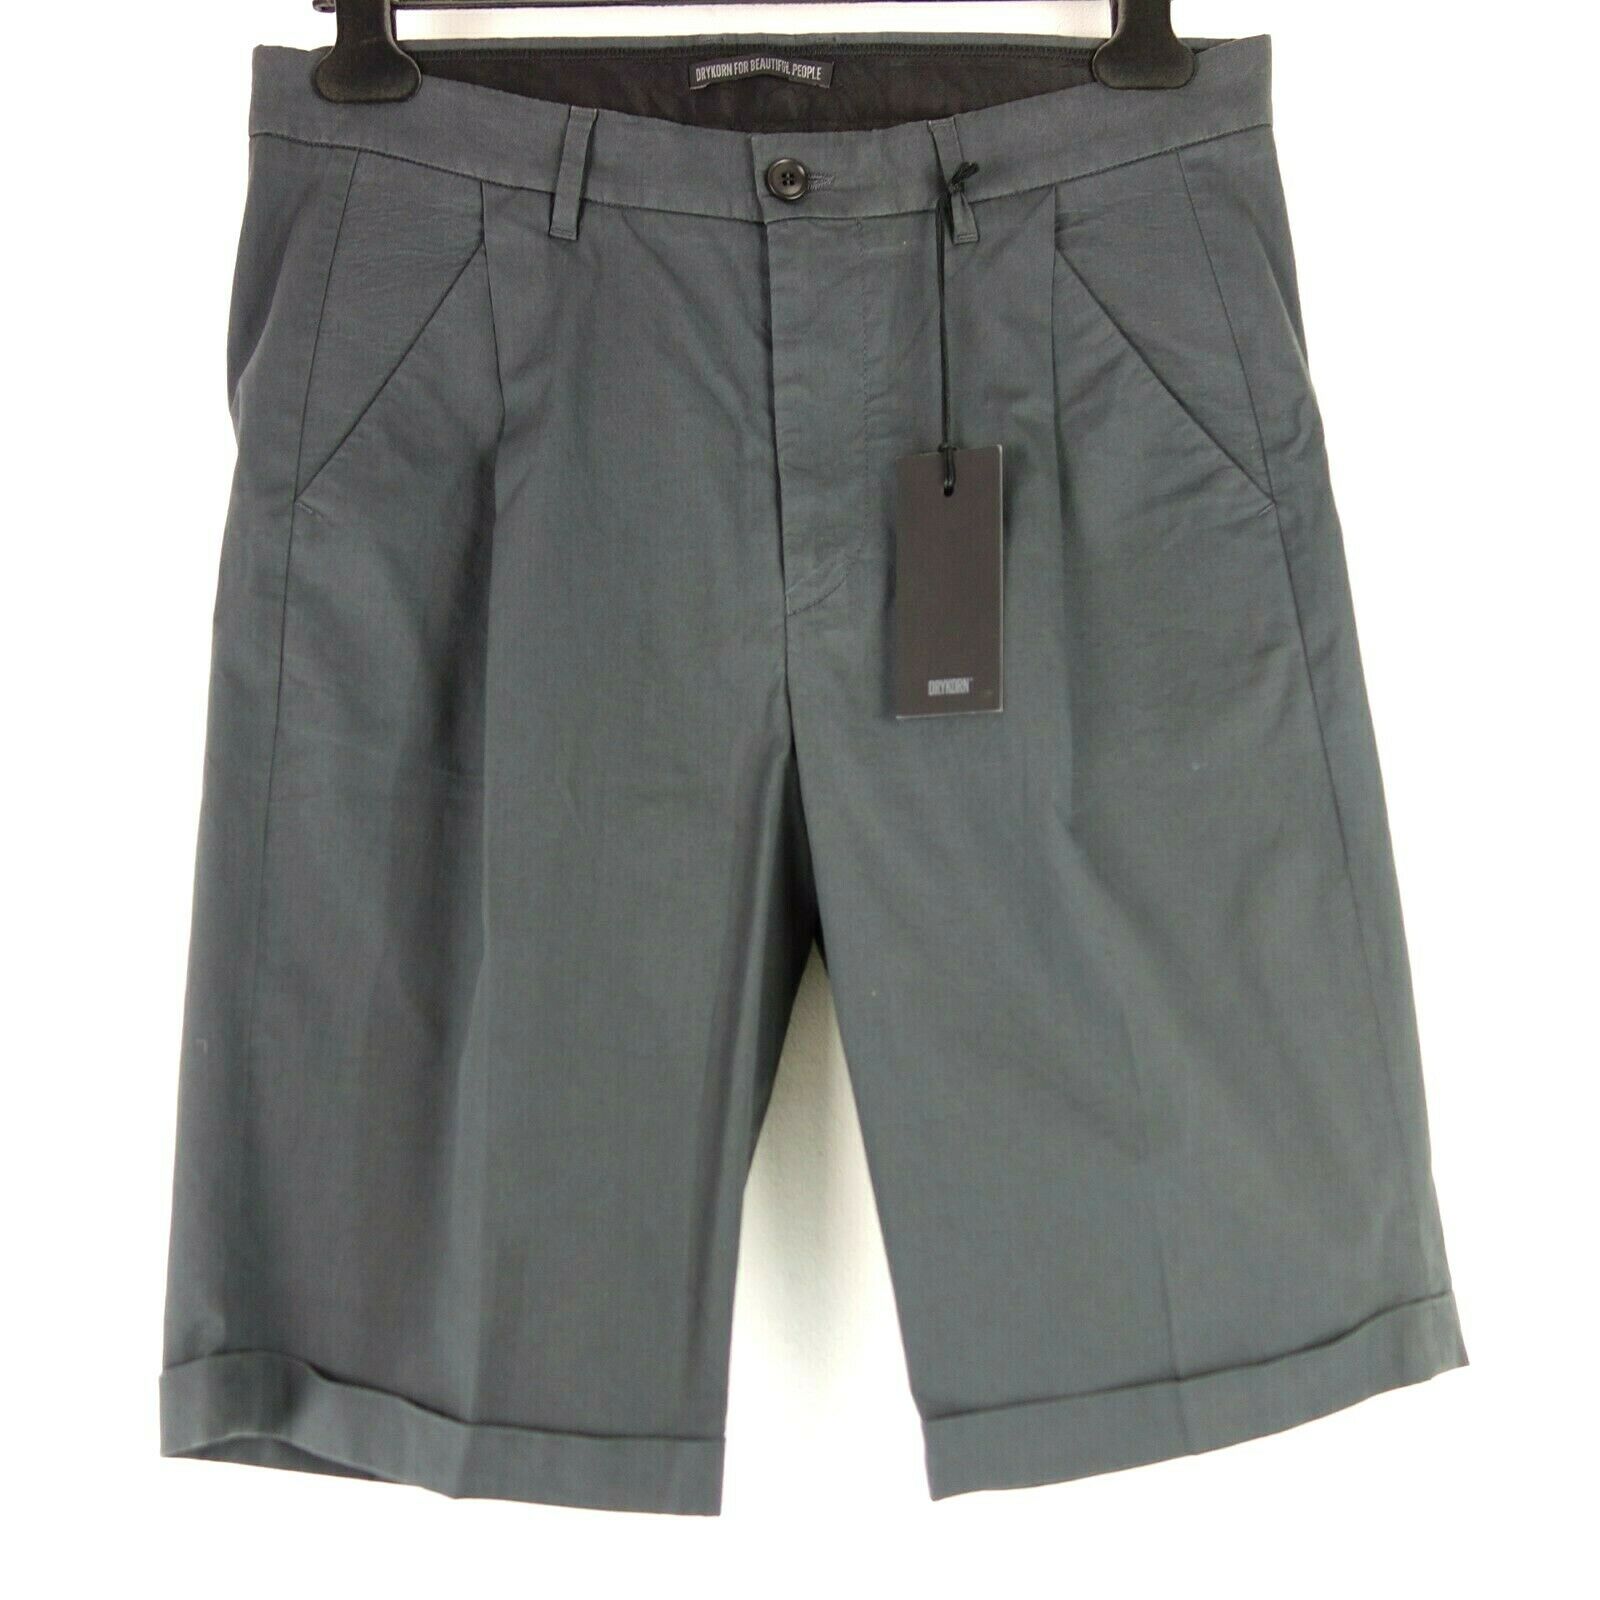 Drykorn Herren Shorts Bermuda Kurze Hose Chino Grau Modell Fired Np 99 Neu - 31